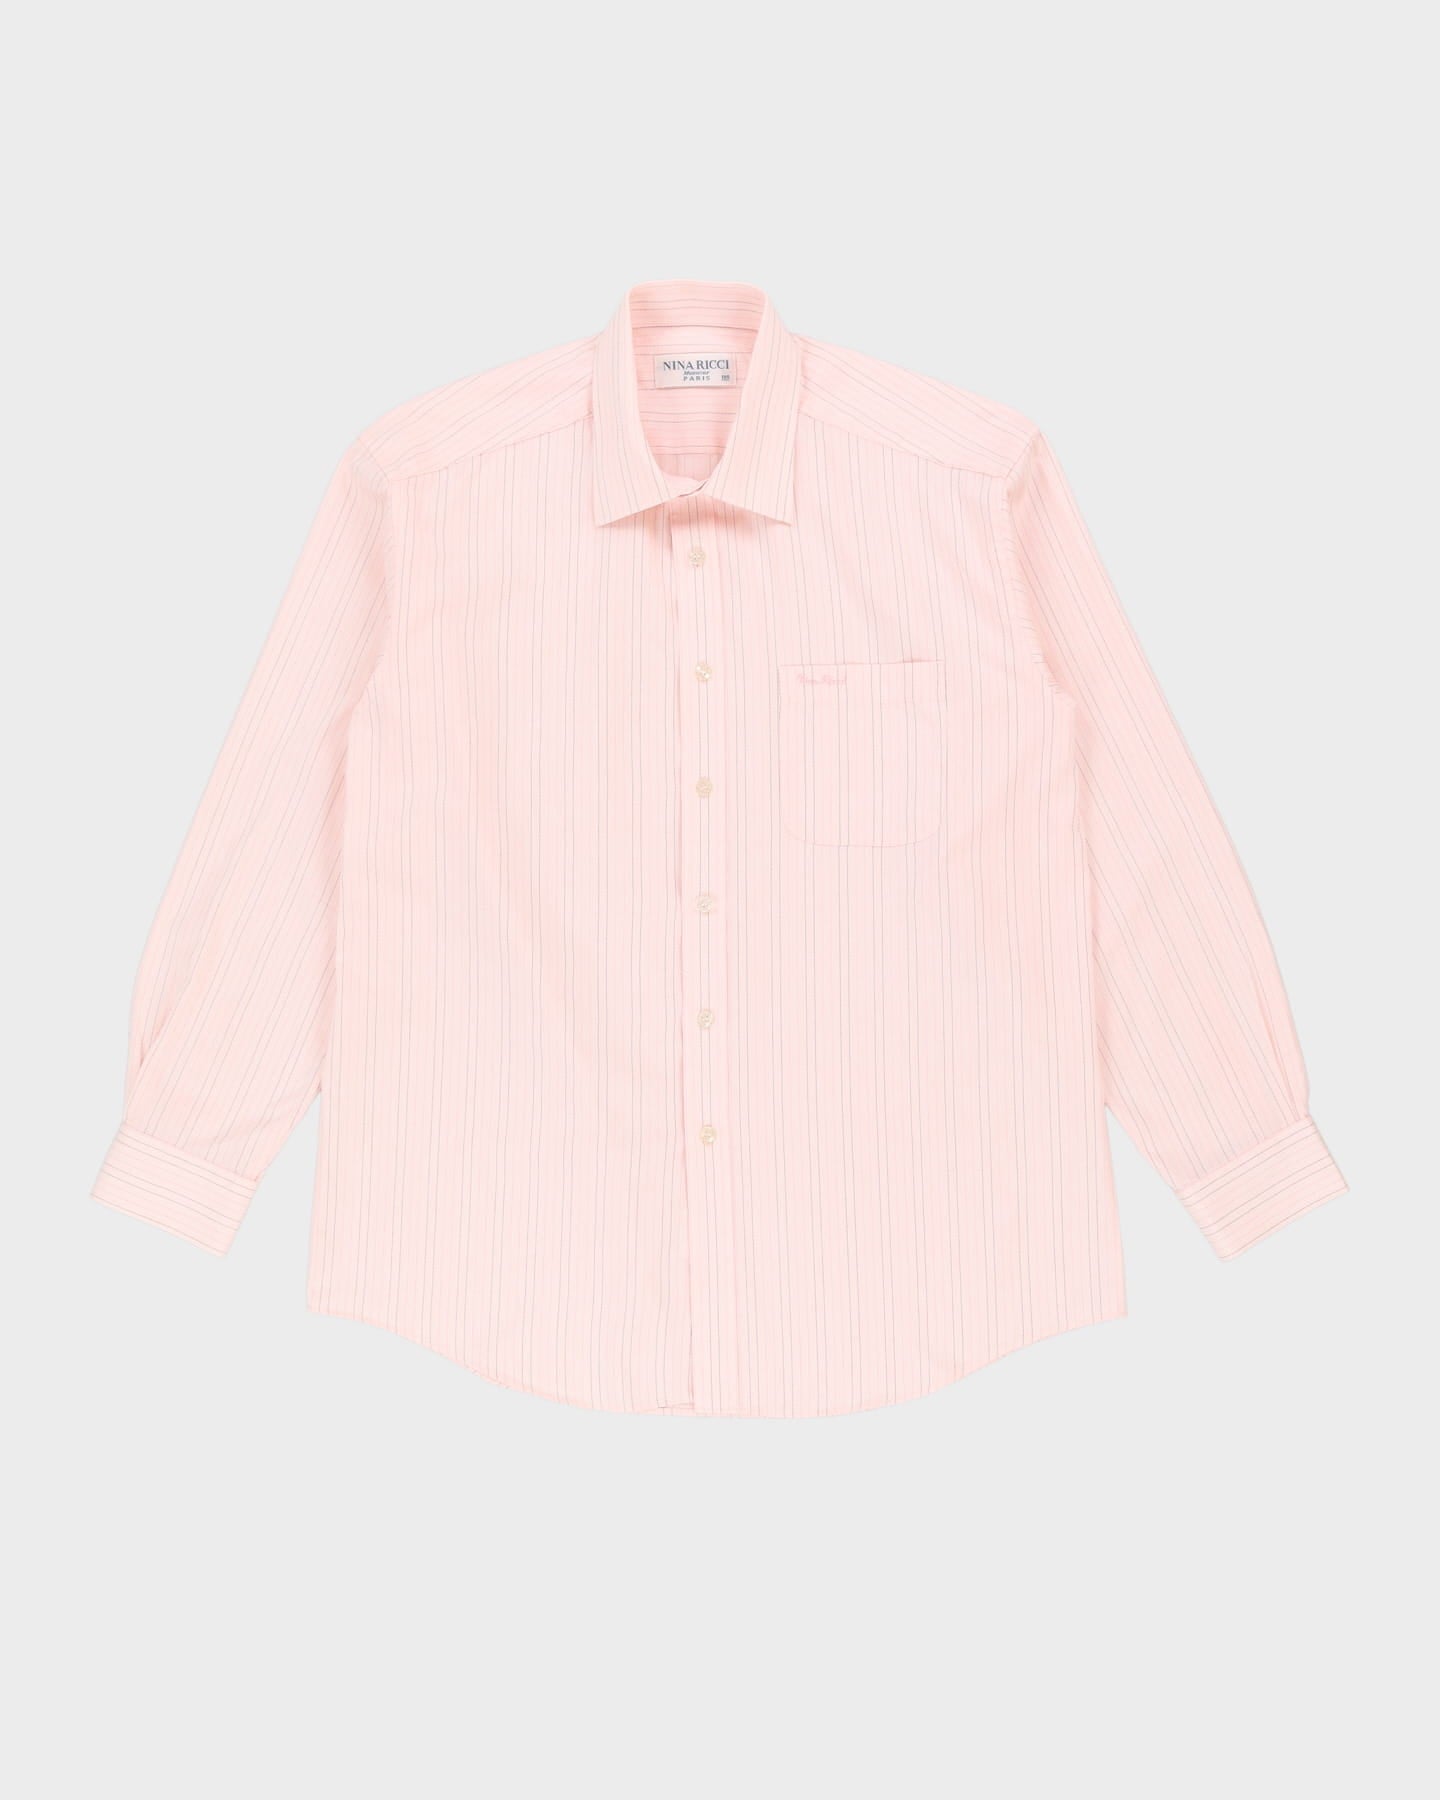 Nina Ricci Monsieur Pink Striped Long-Sleeve Shirt - L